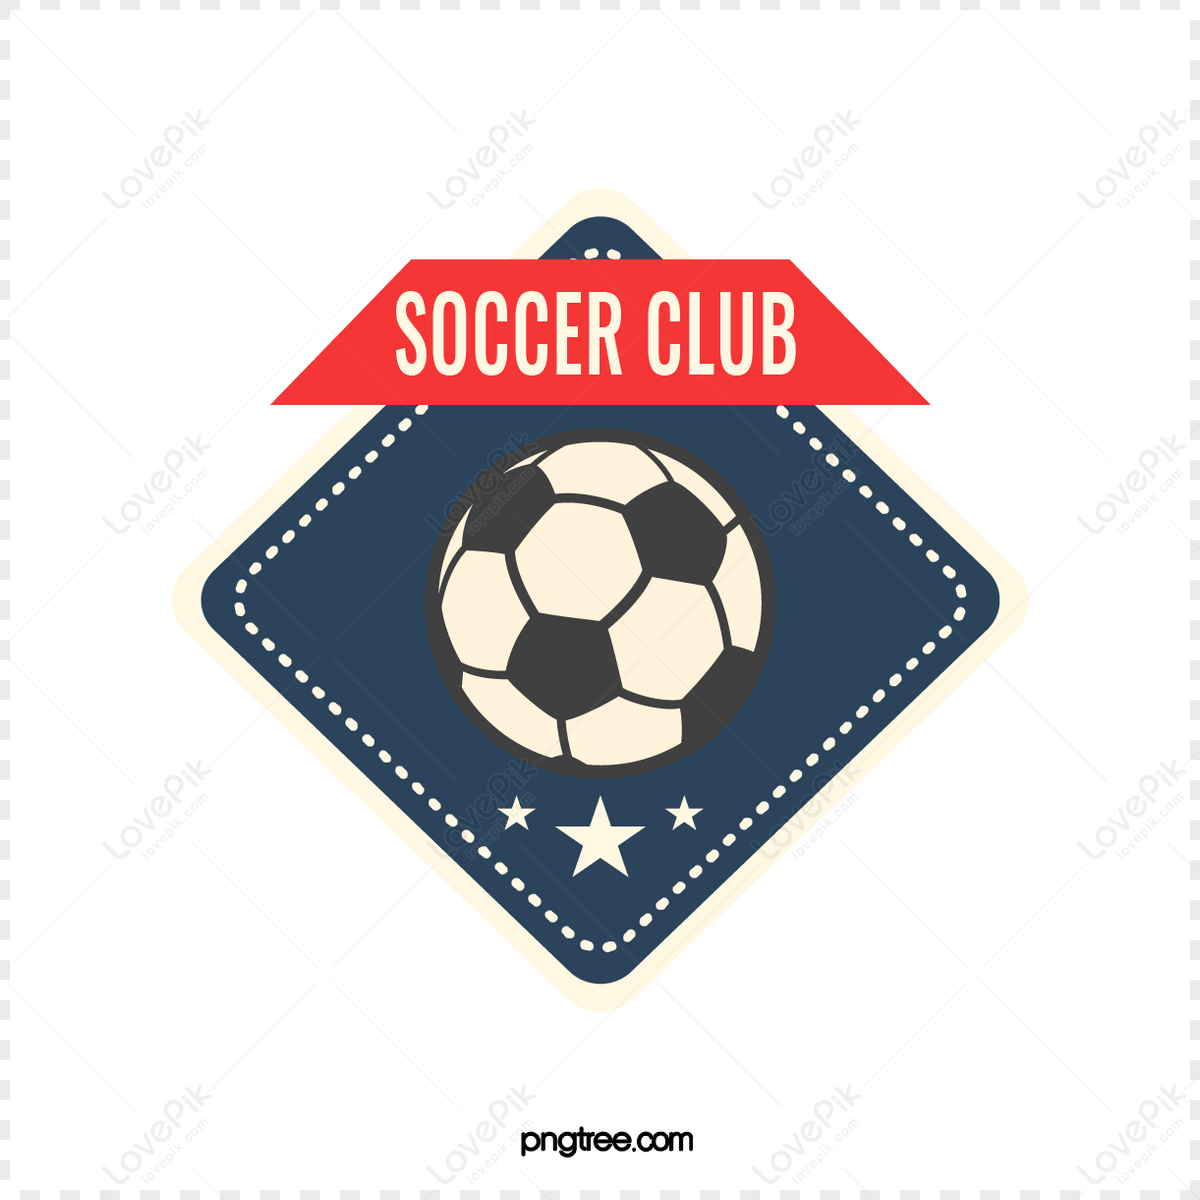 Customize 629+ Football Logo Templates Online - Canva